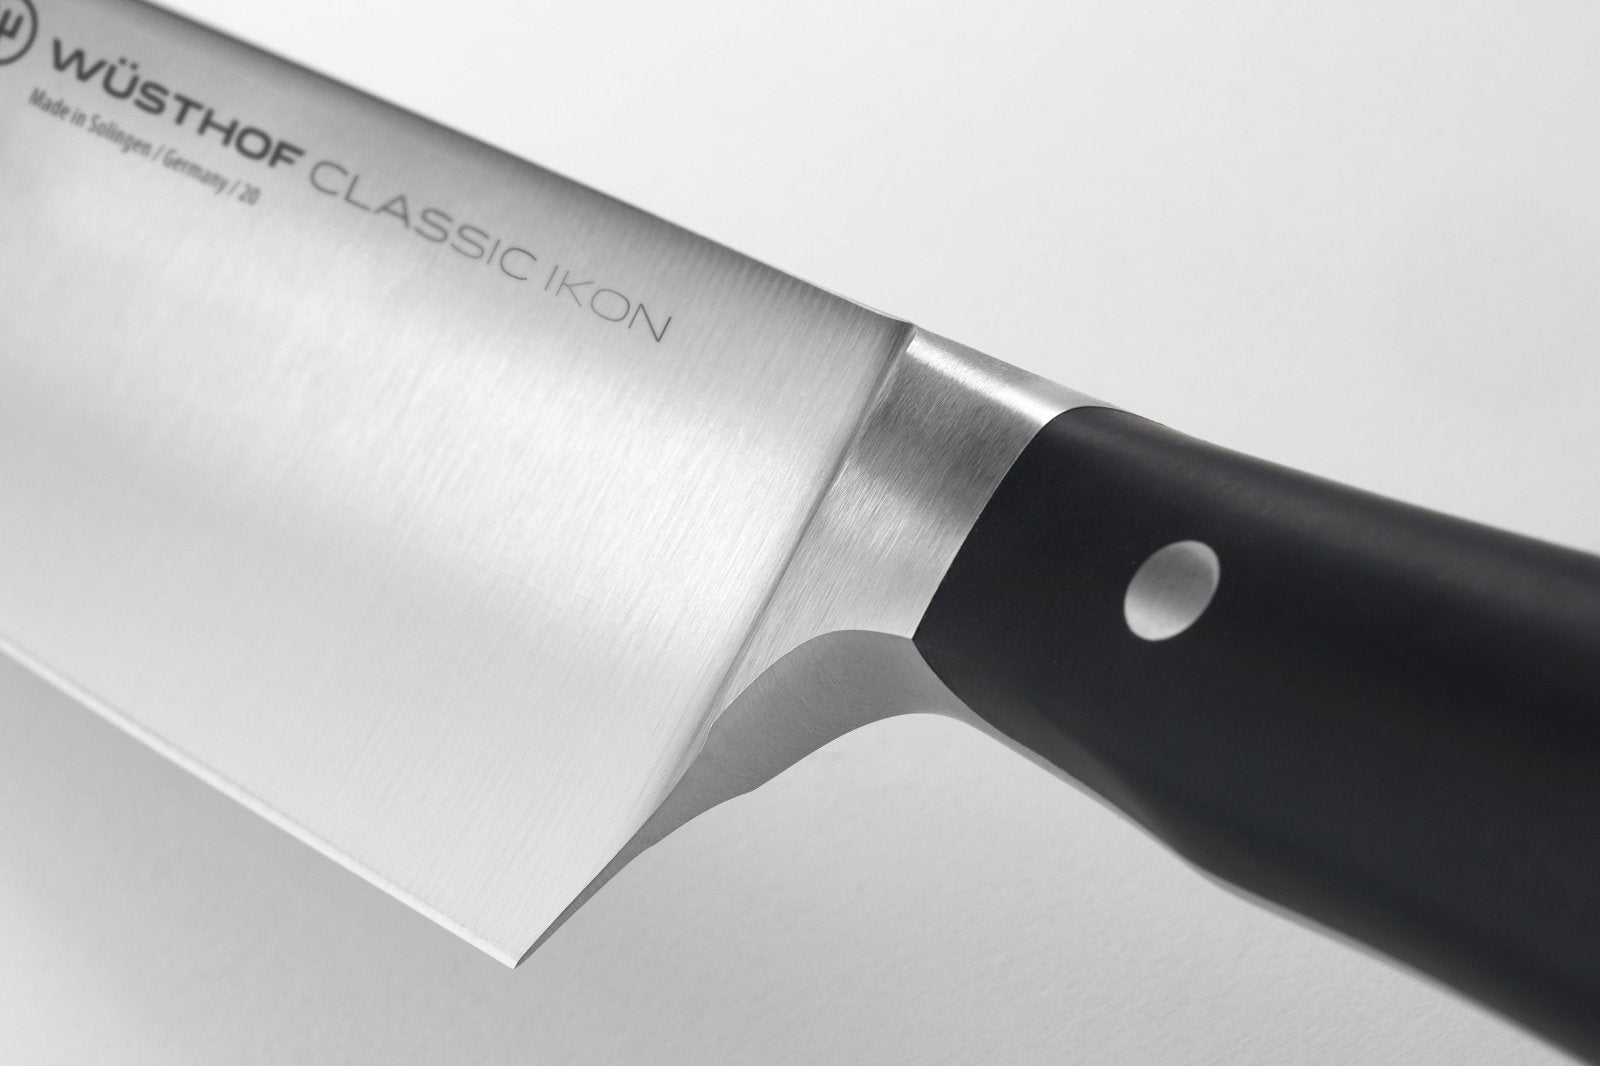 Wusthof Classic IKON 8cm Paring Knife - WT1040333208 - The Cotswold Knife Company